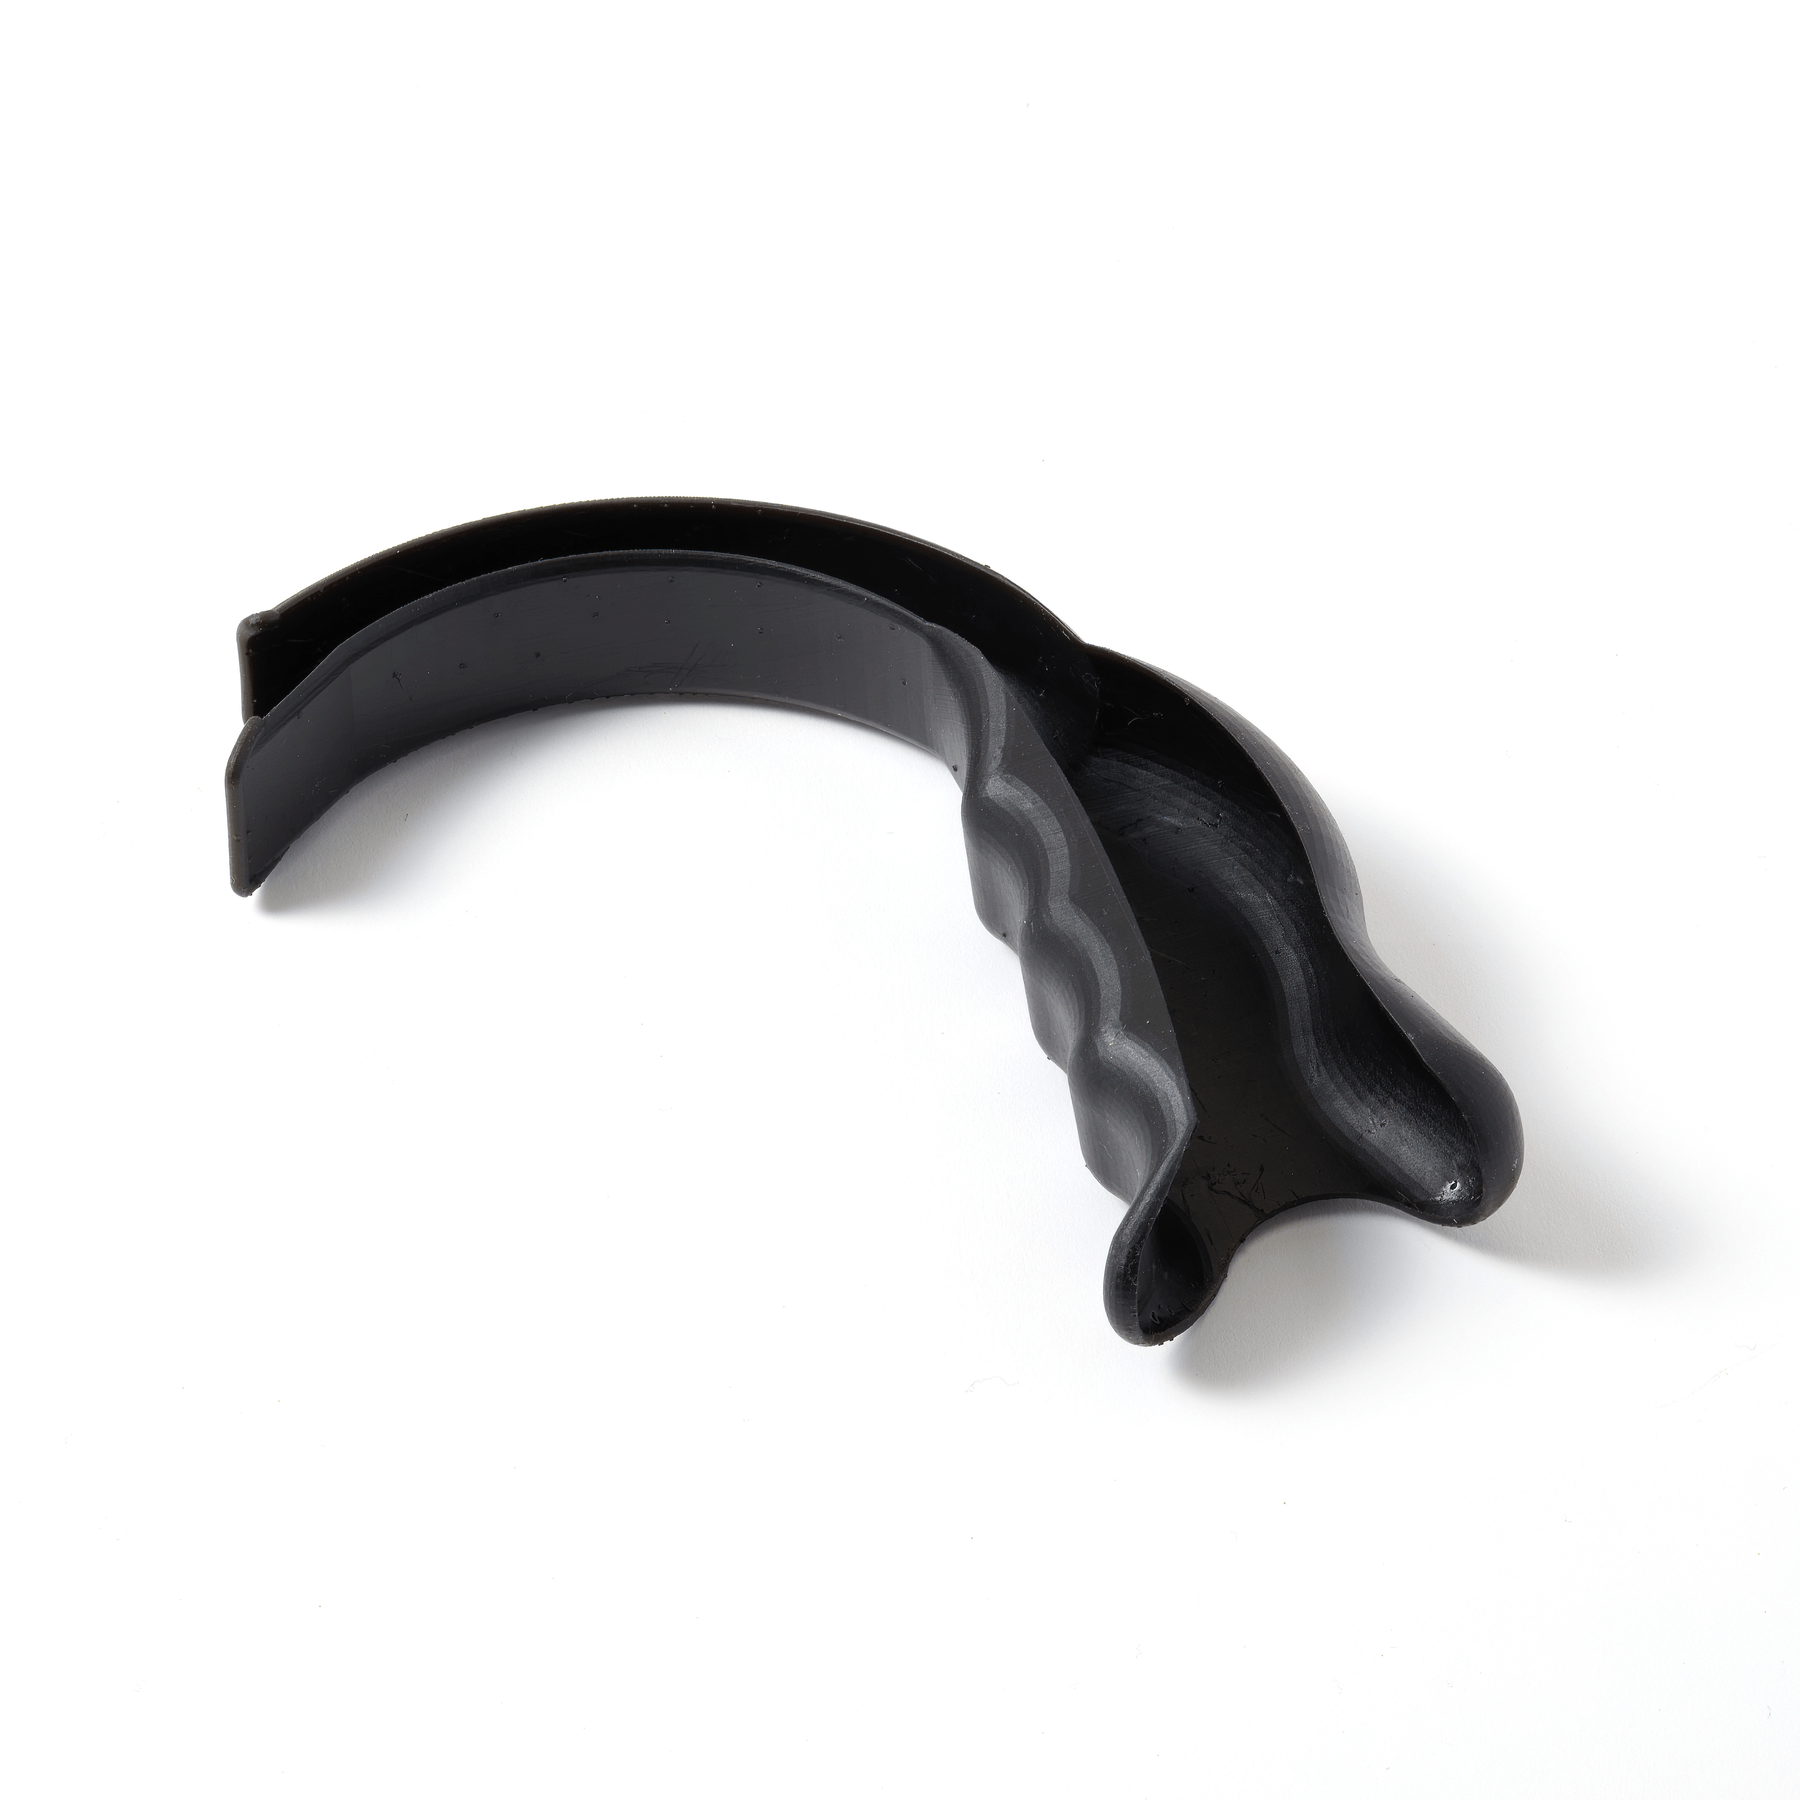 3D printed black biocompatible part